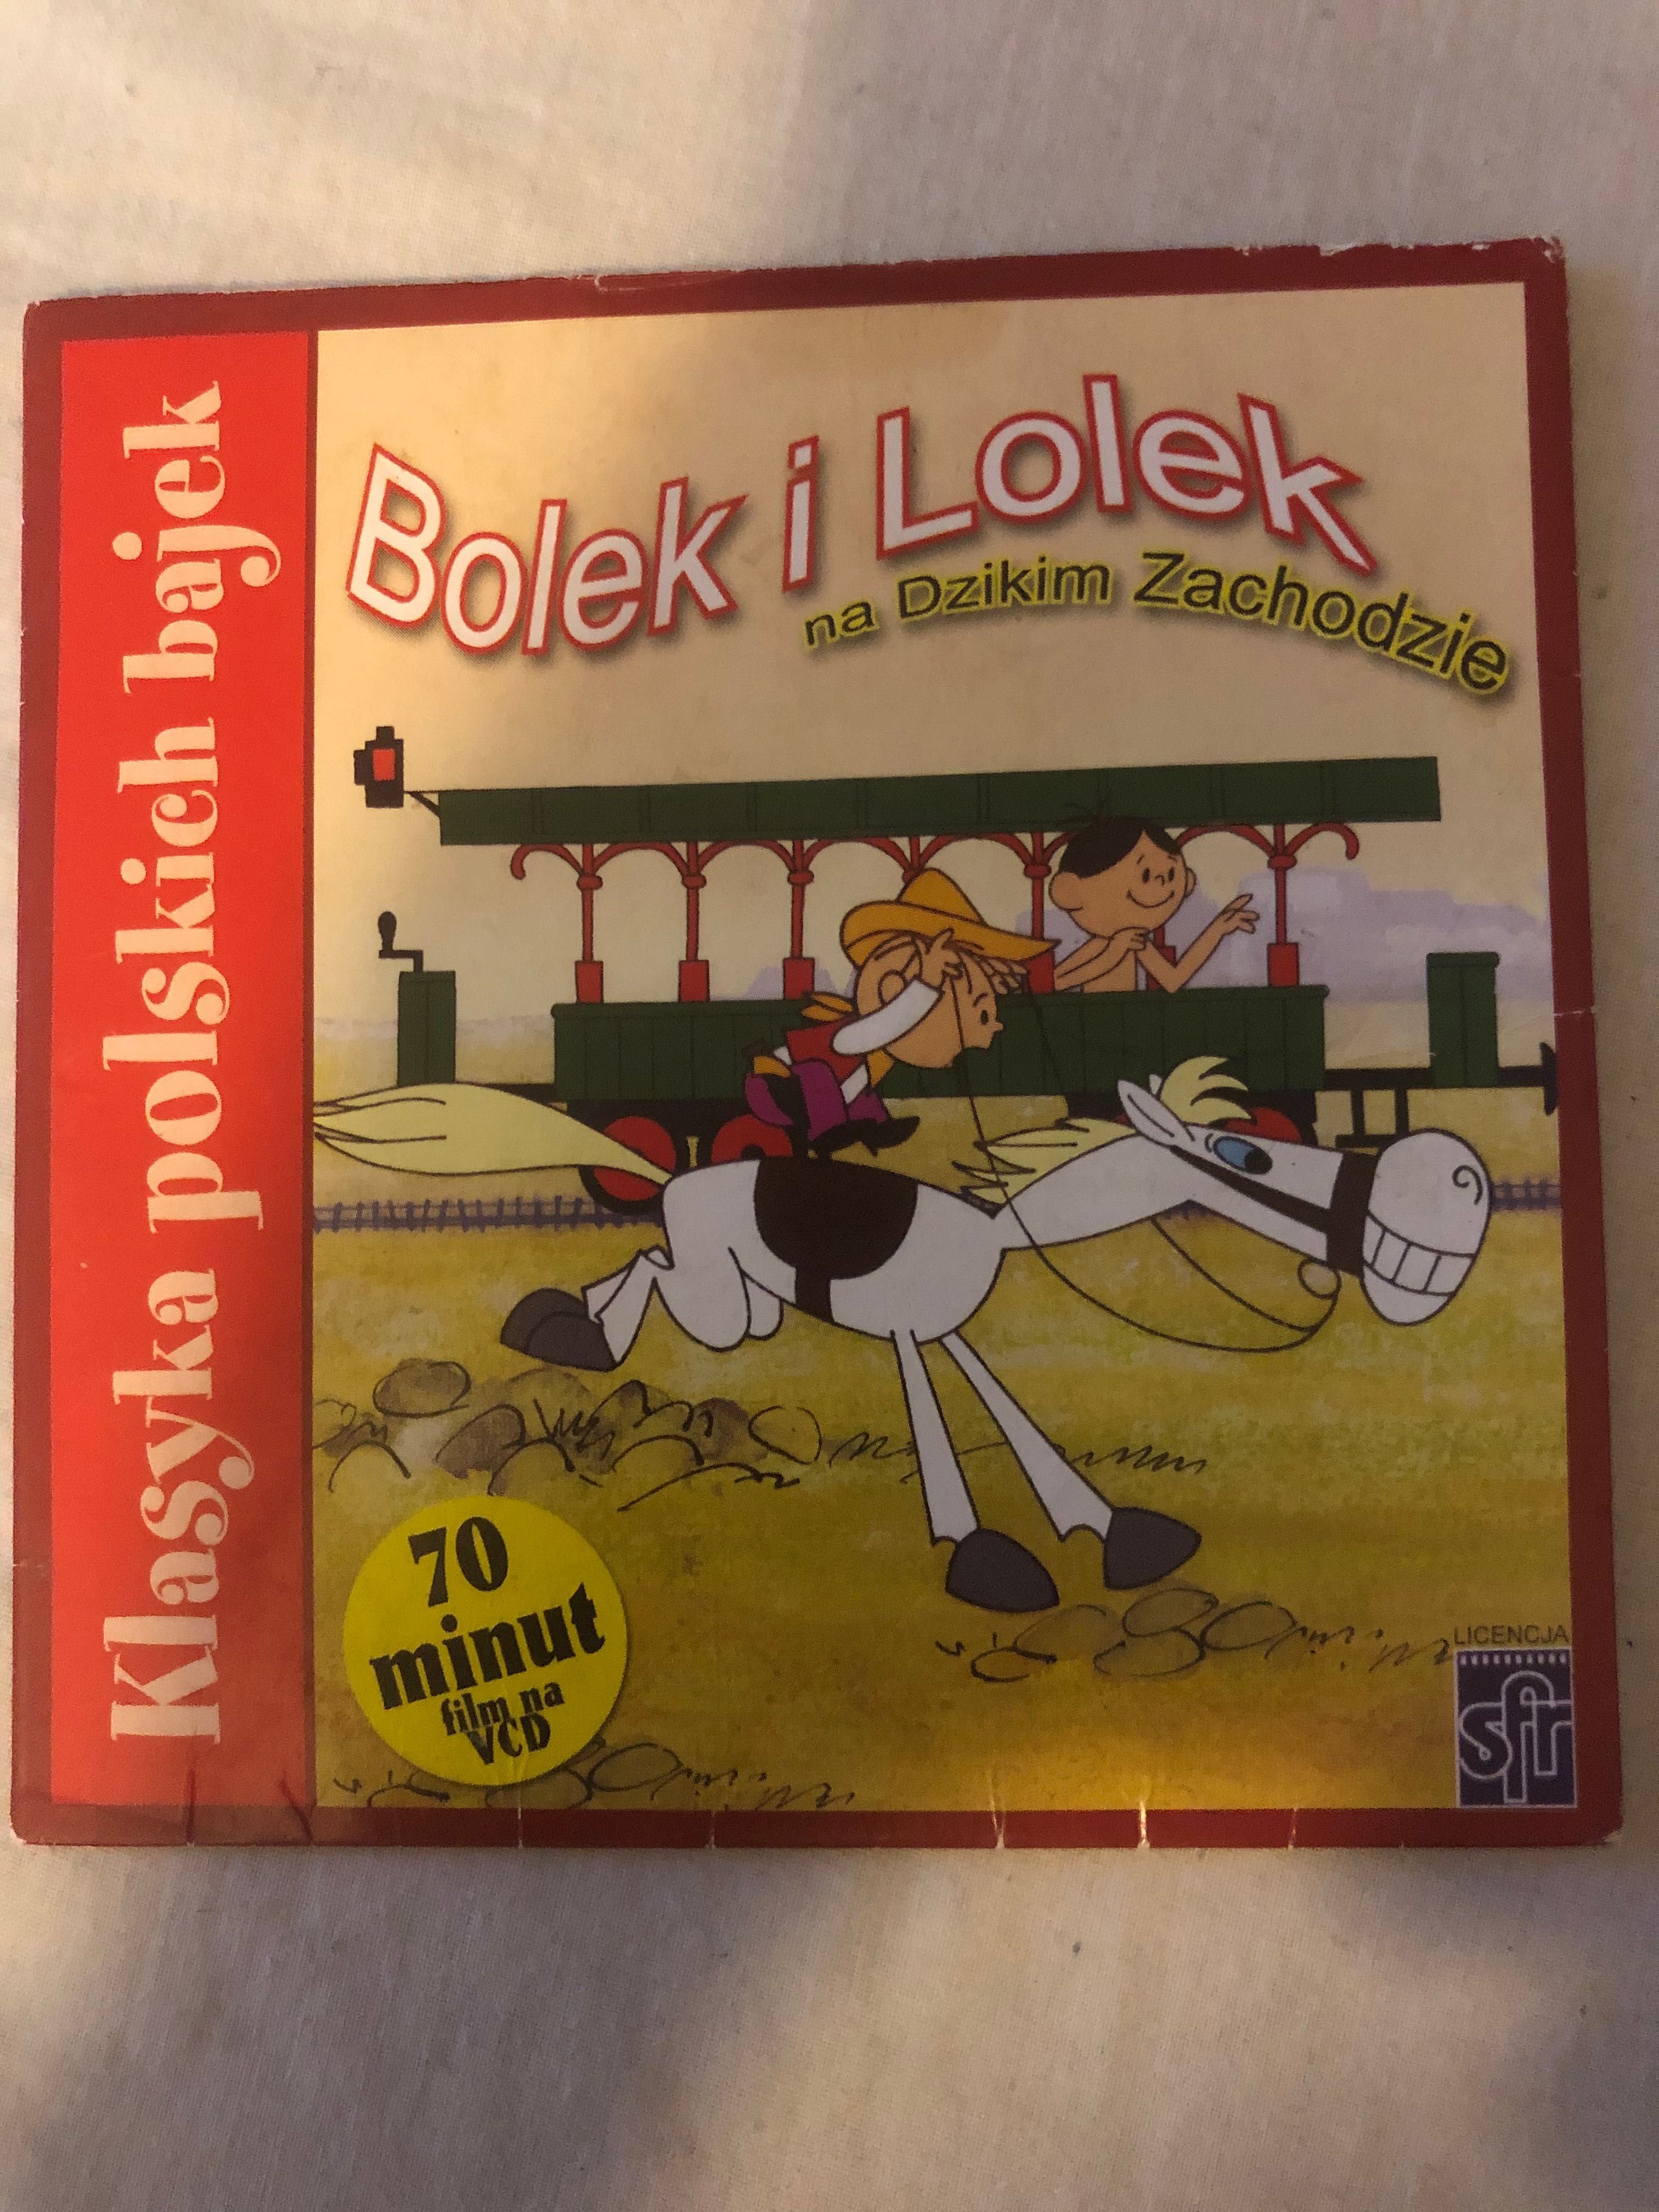 Film VCD pt. Bolek i Lolek na Dzikim Zachodzie, 70 minut